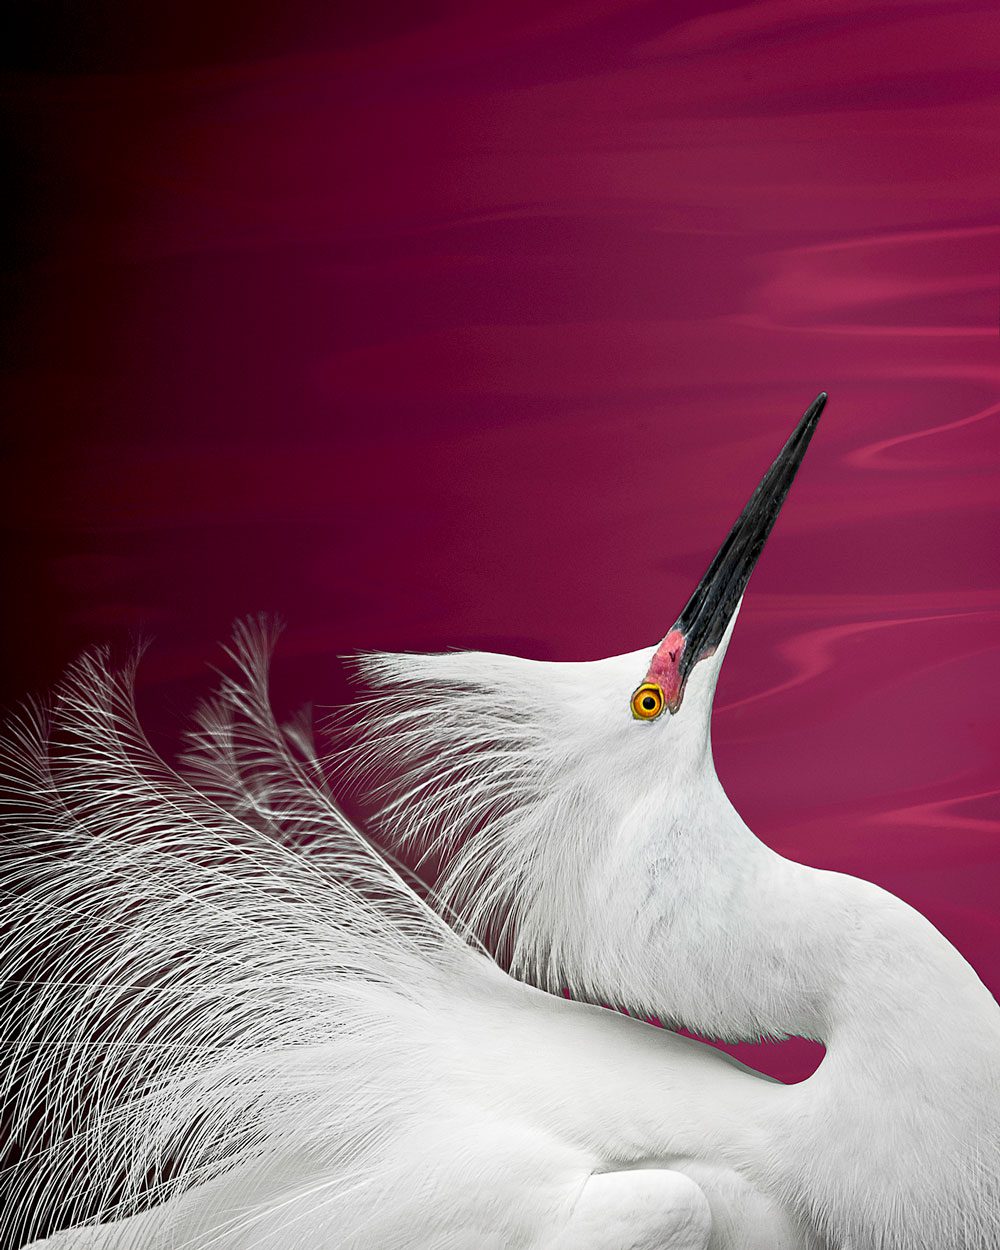 Snowy Egret by Cheryl Medow